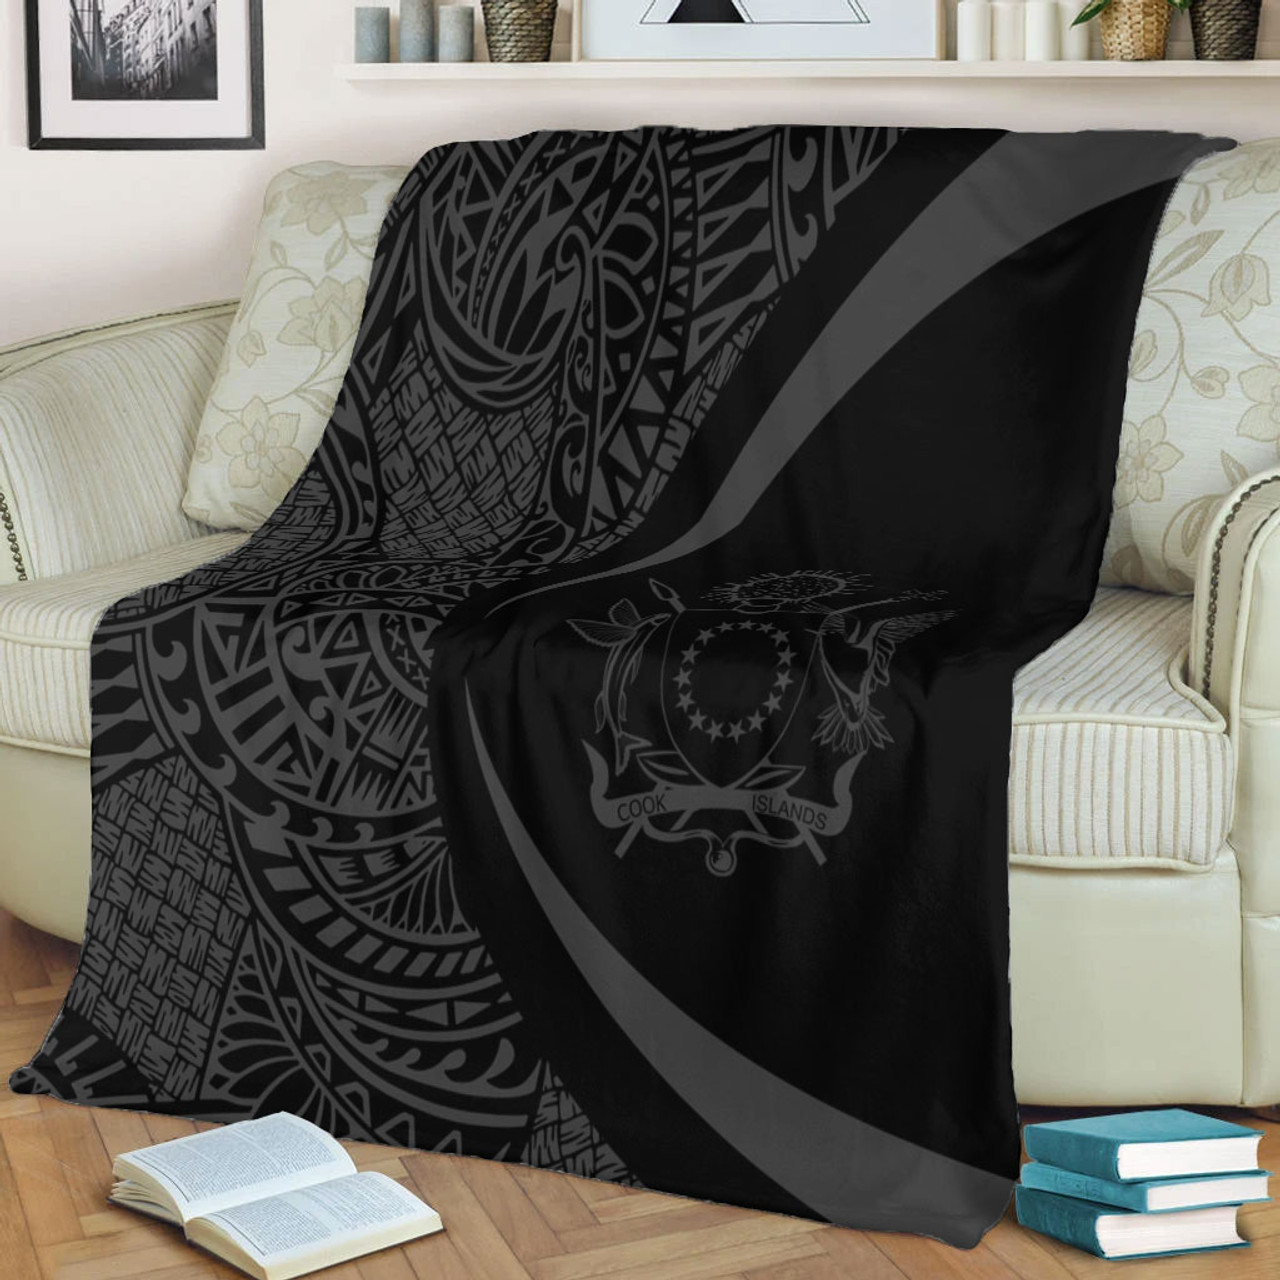 Cook Islands Premium Blanket Lauhala Gray Circle Style